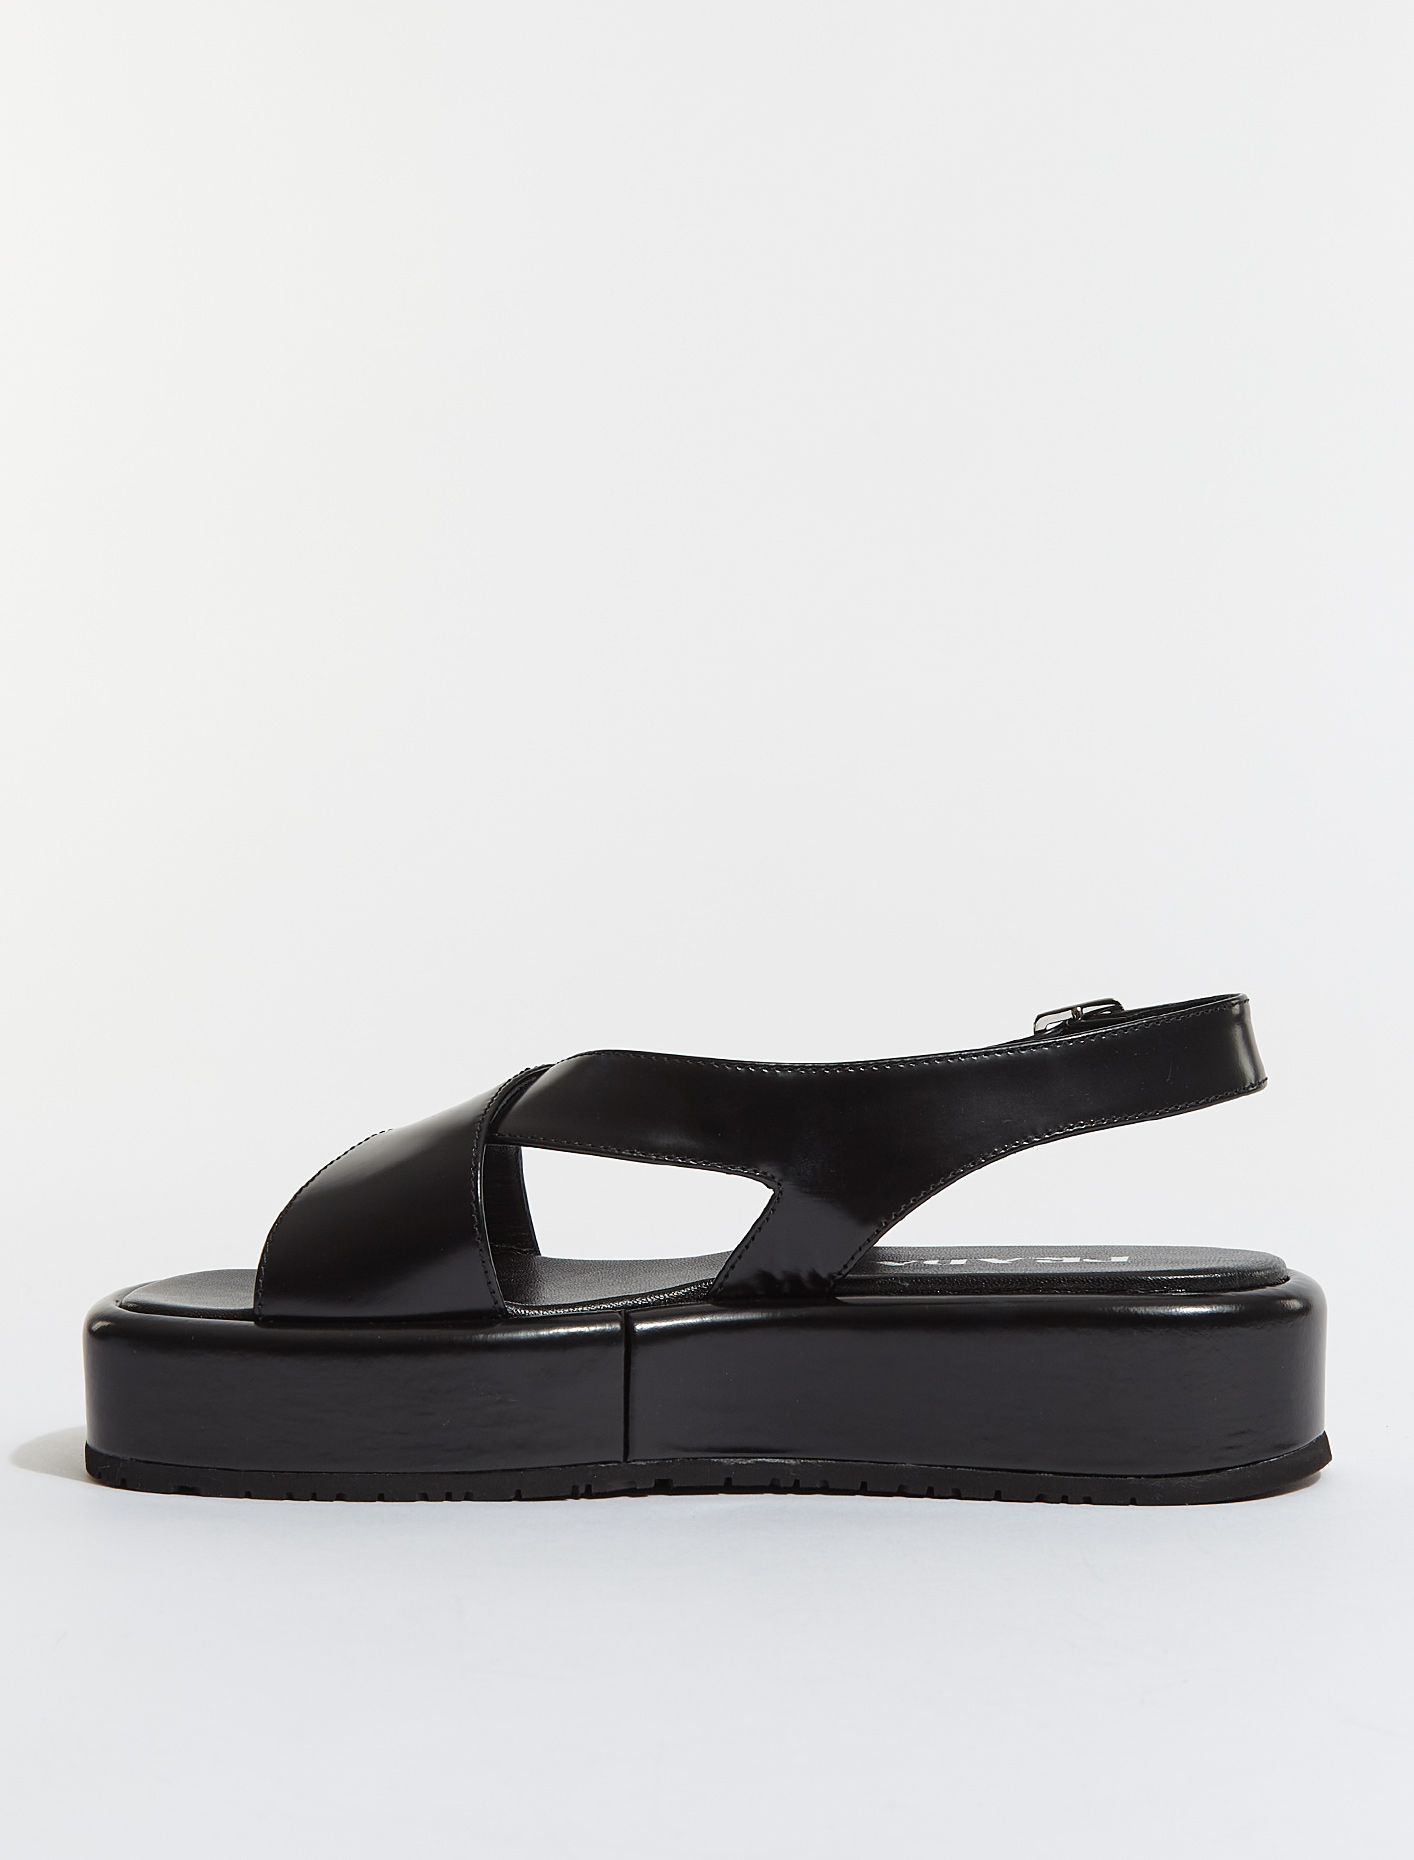 Prada Wedge Leather Sandals in Black | Voo Store Berlin | Worldwide ...